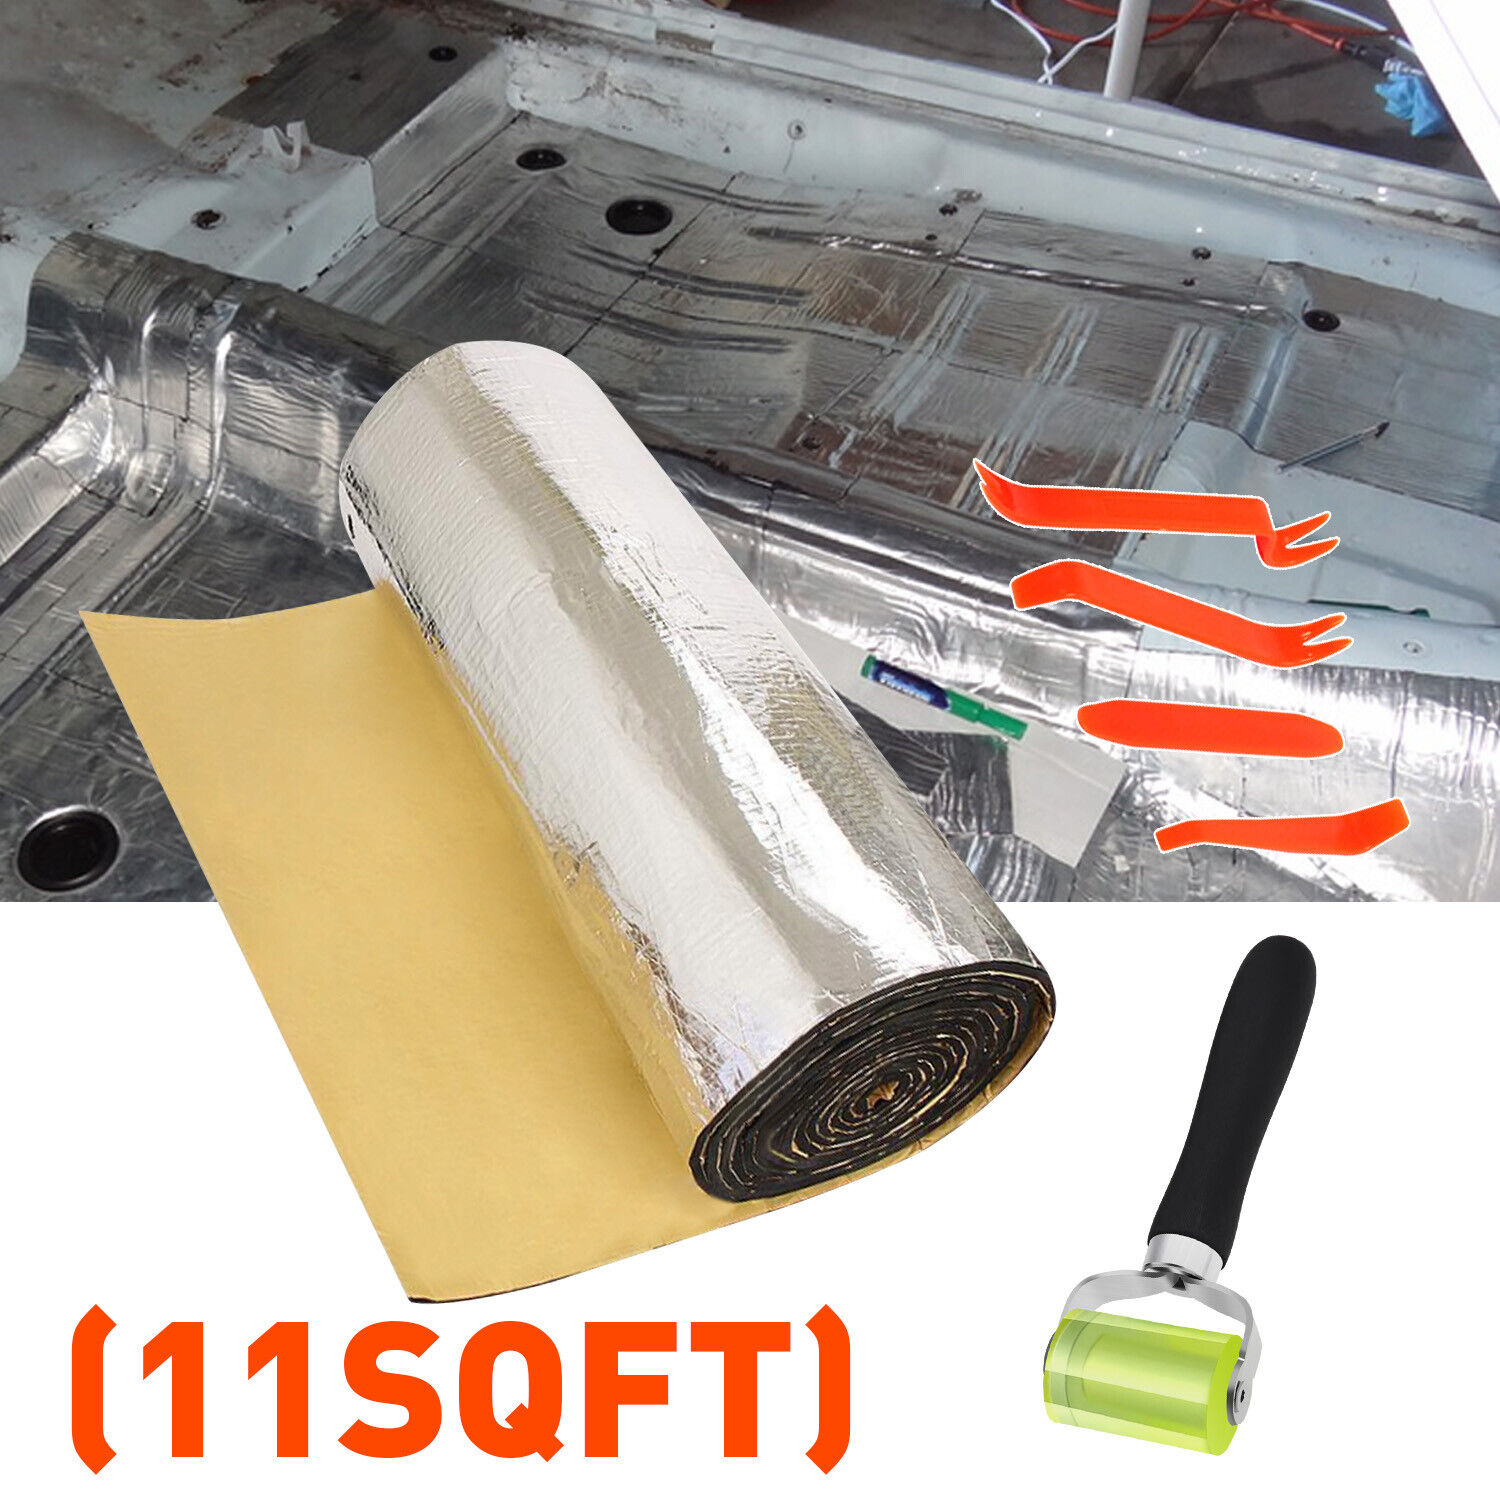 Self-adhesive Fireproof Sound Deadener Heat Insulation Mat For Car Hood Engine